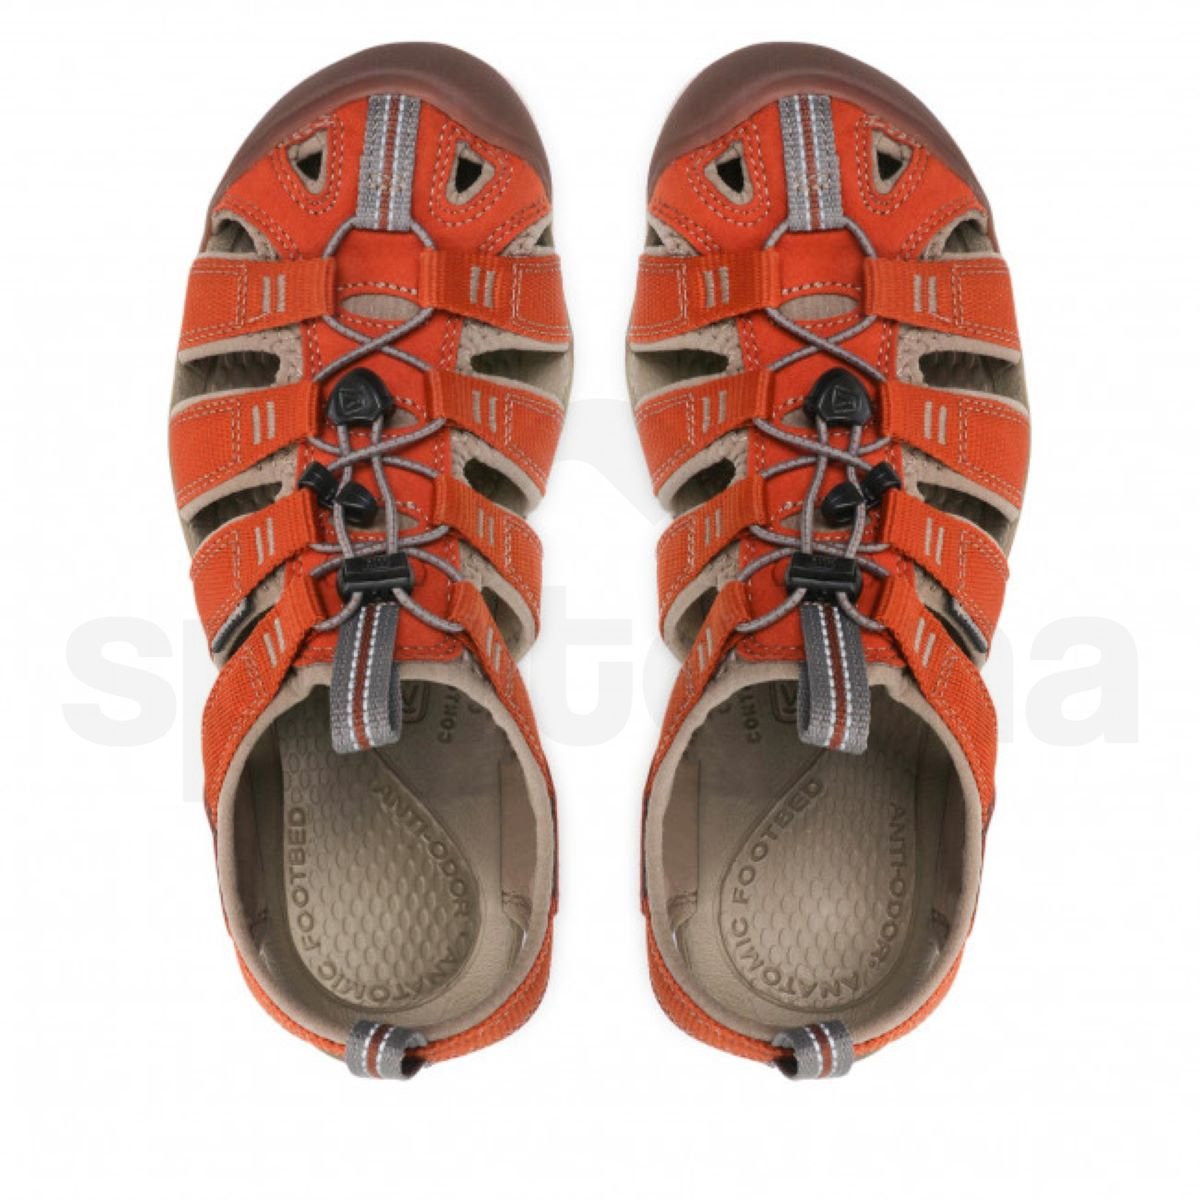 Obuv - sandály Keen Clearwater CNX M - oranžová